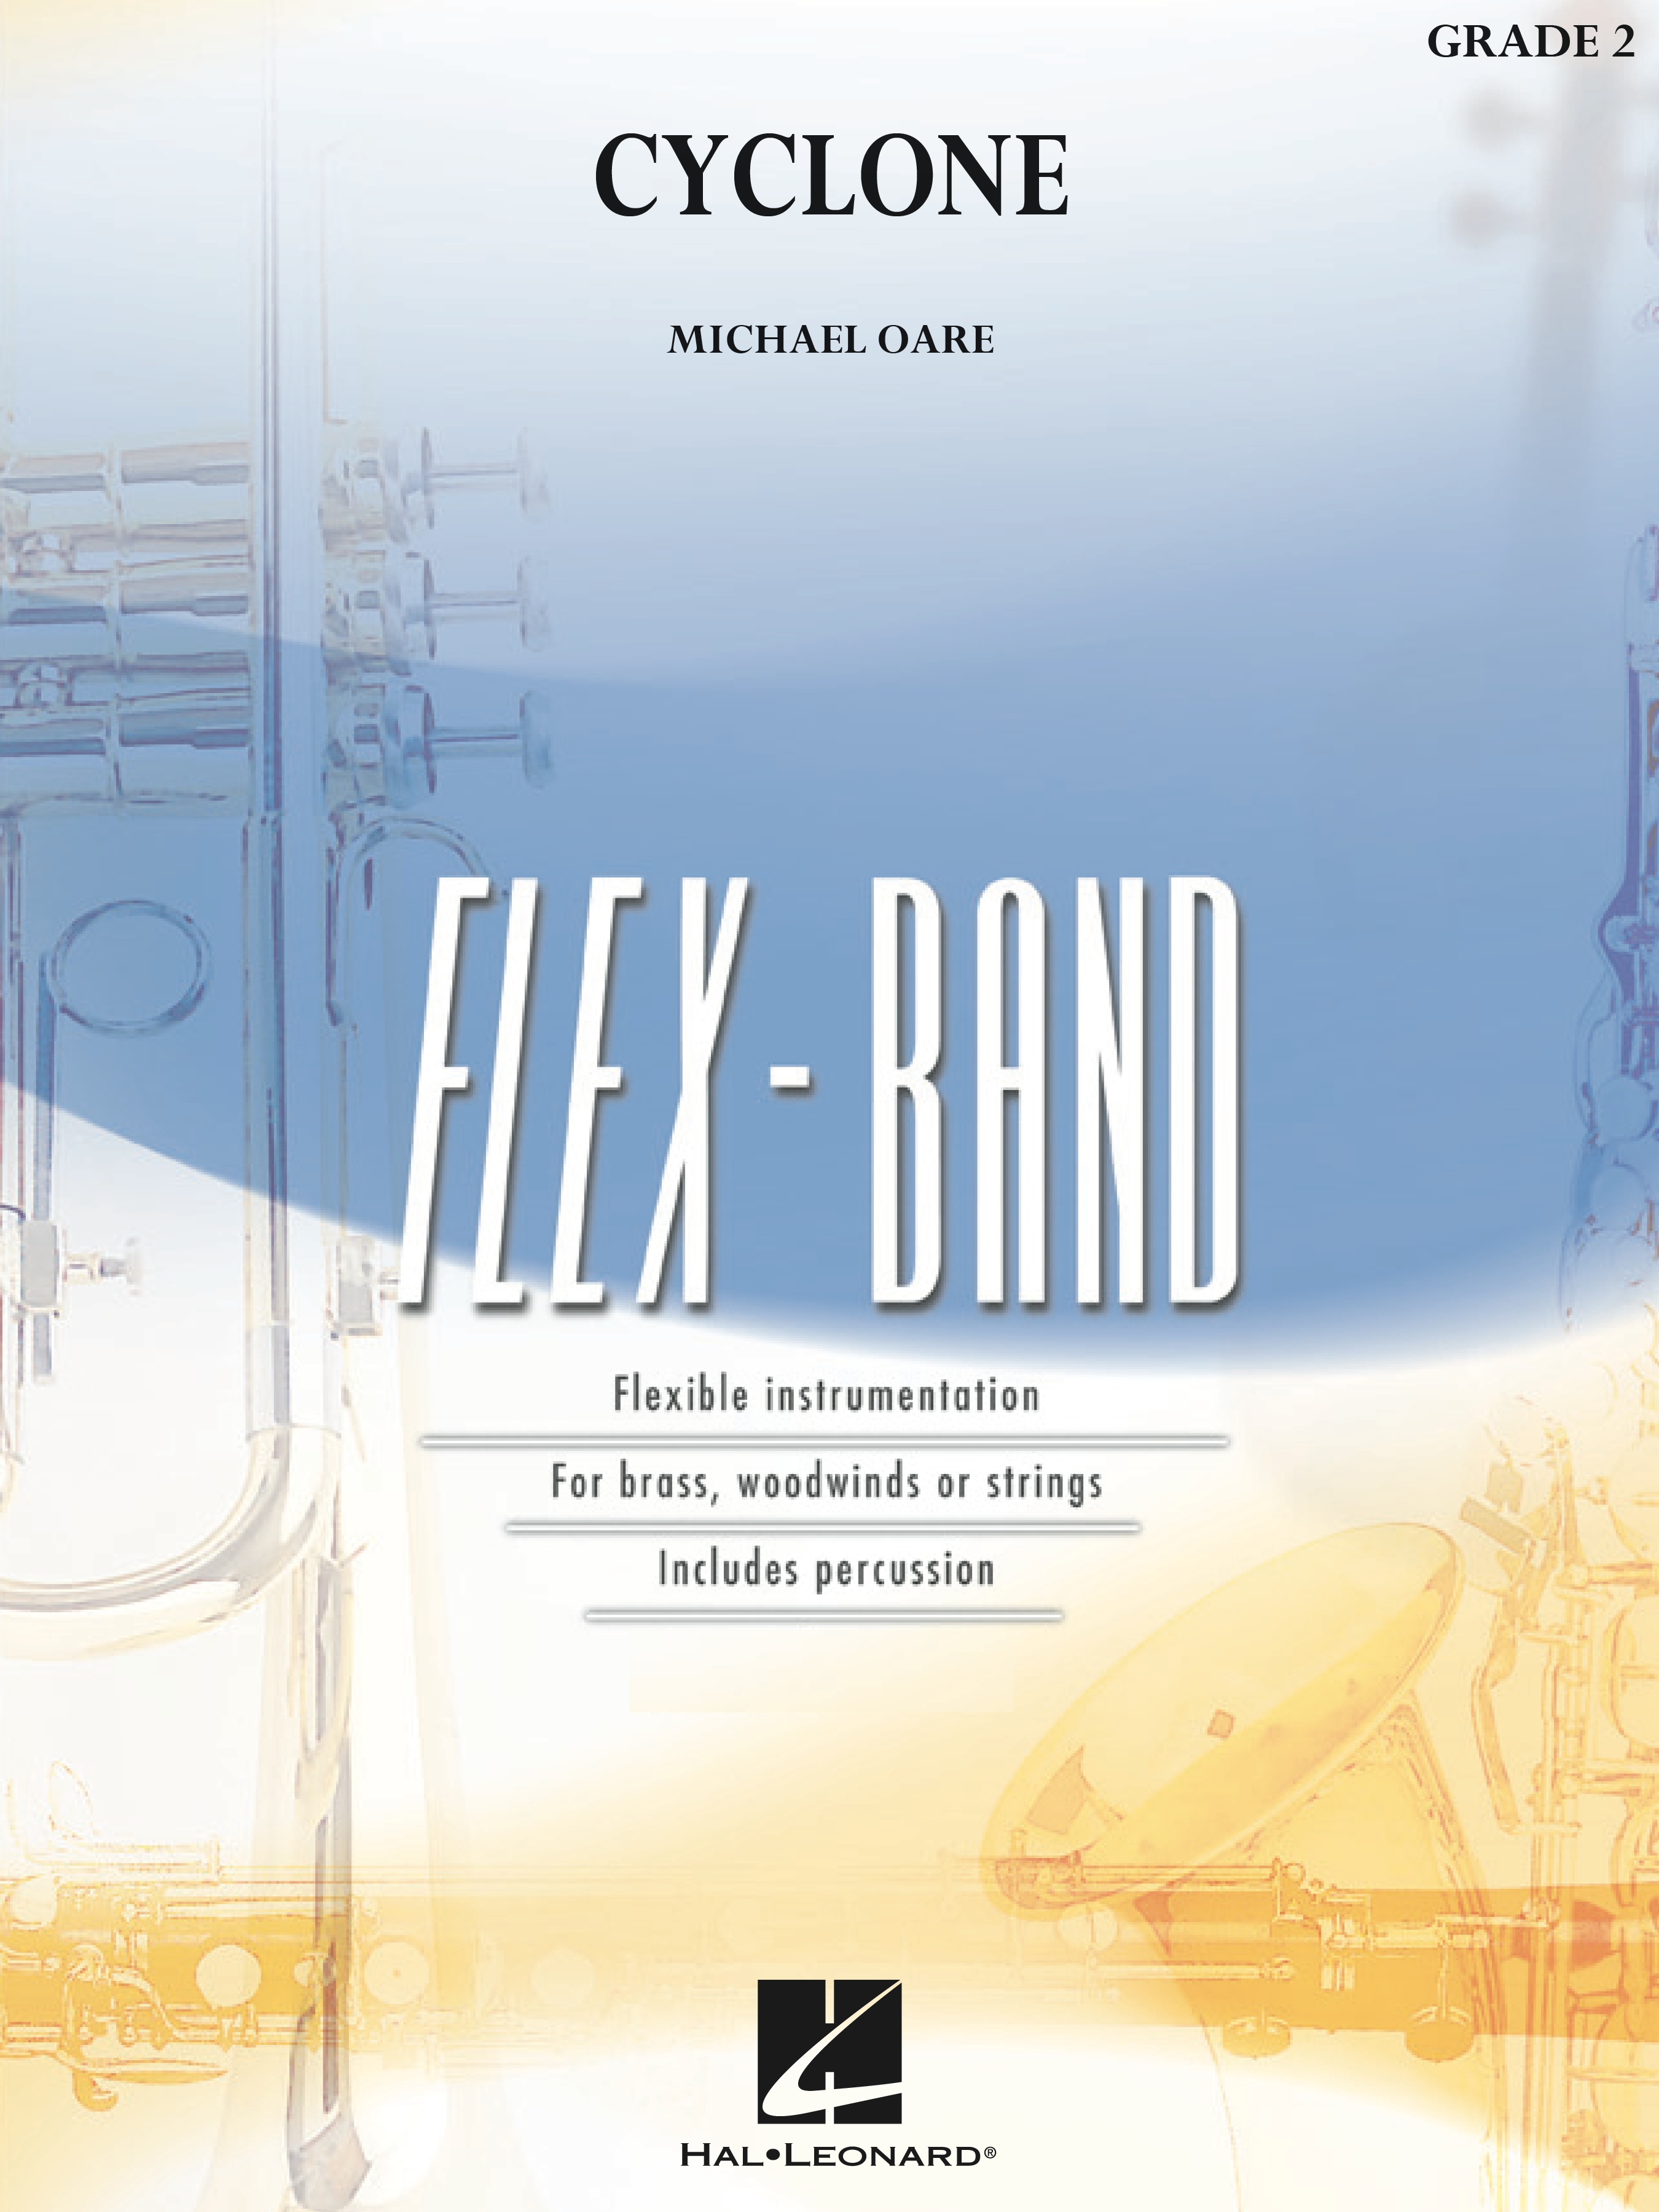 Michael Oare: Cyclone: Flexible Band